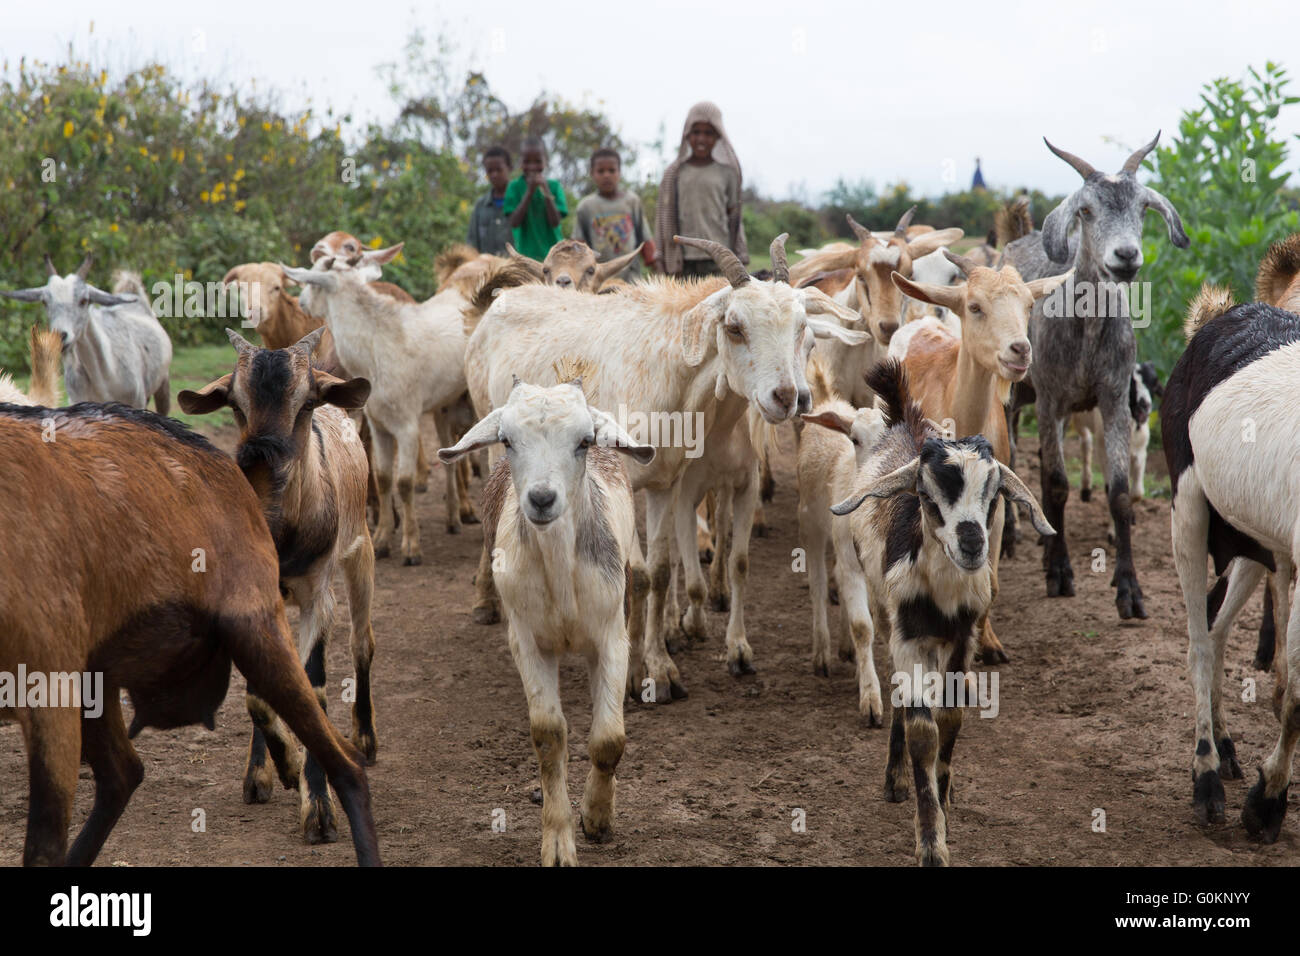 Meki River Delta, Ethiopia, October 2013: Children herding goats to pasture. Stock Photo